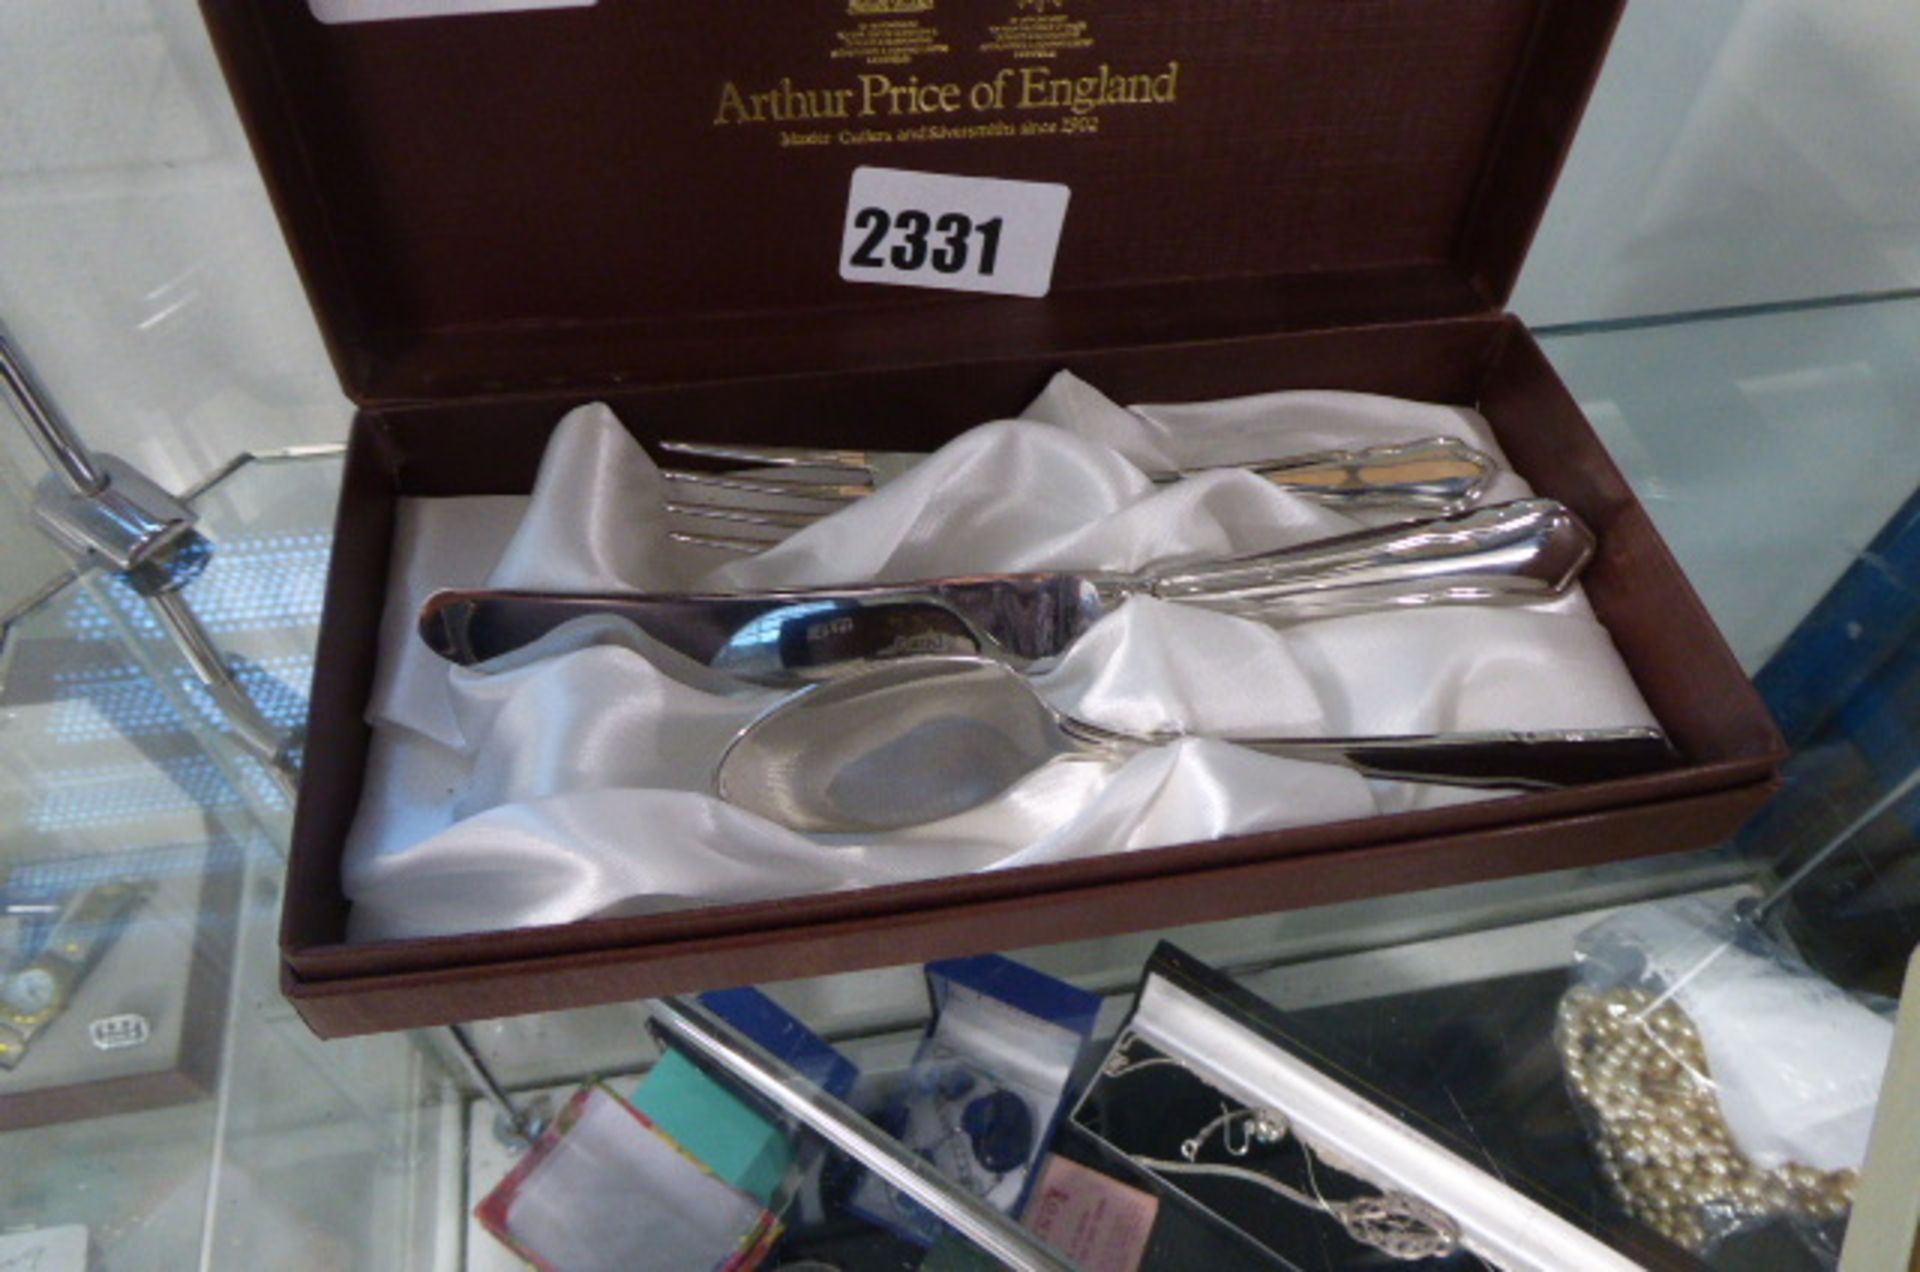 Arthur Price of England cutlery set in box